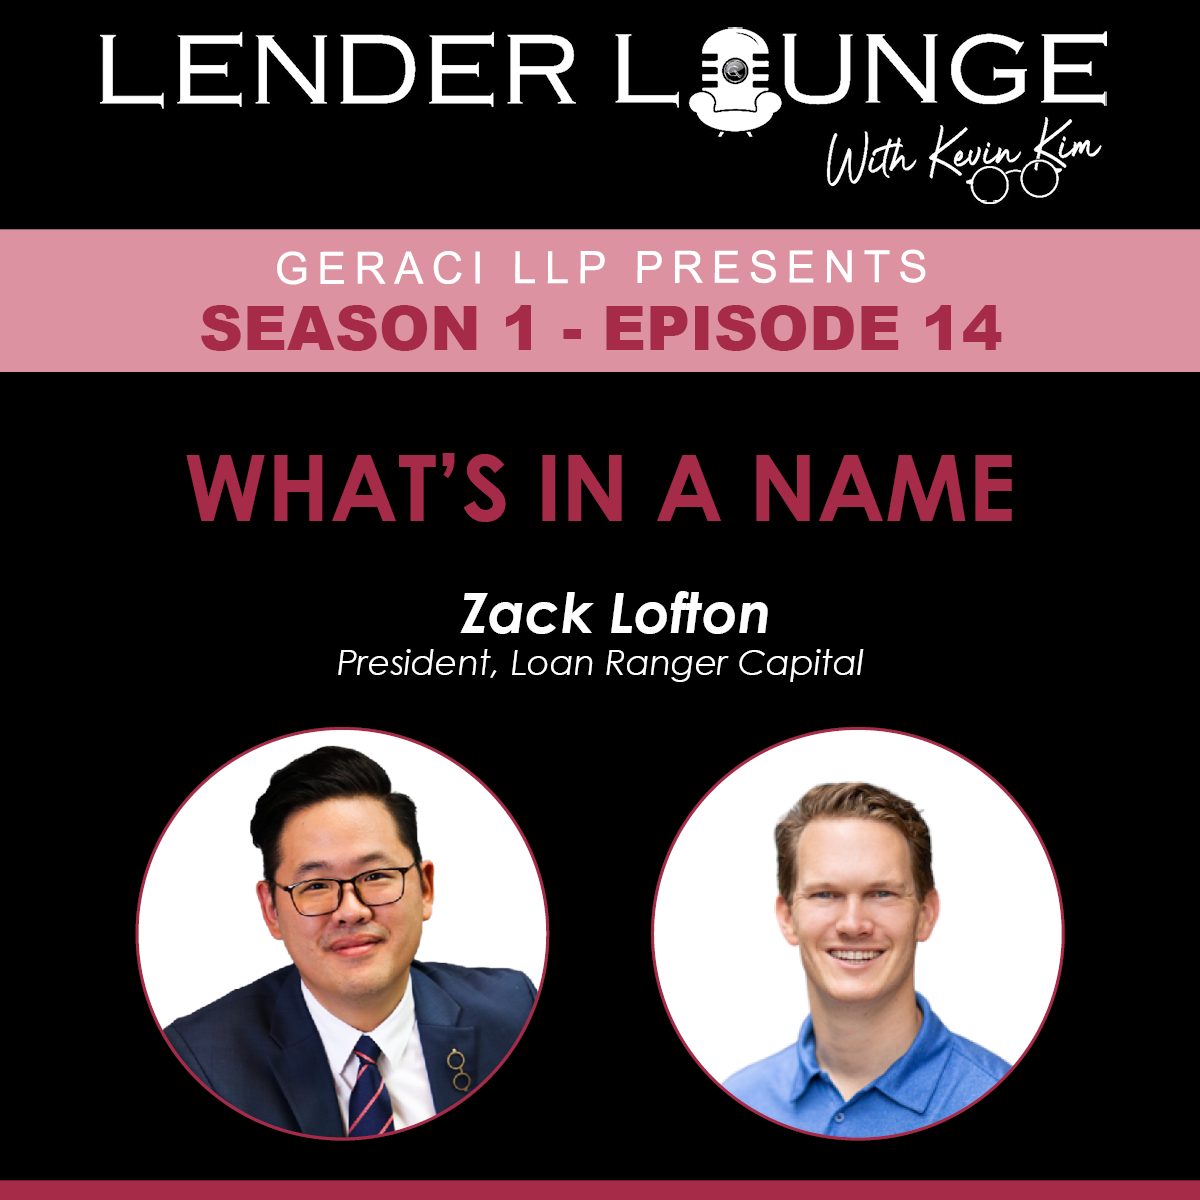 lender-lounge-with-kevin-kim-zach-lofton